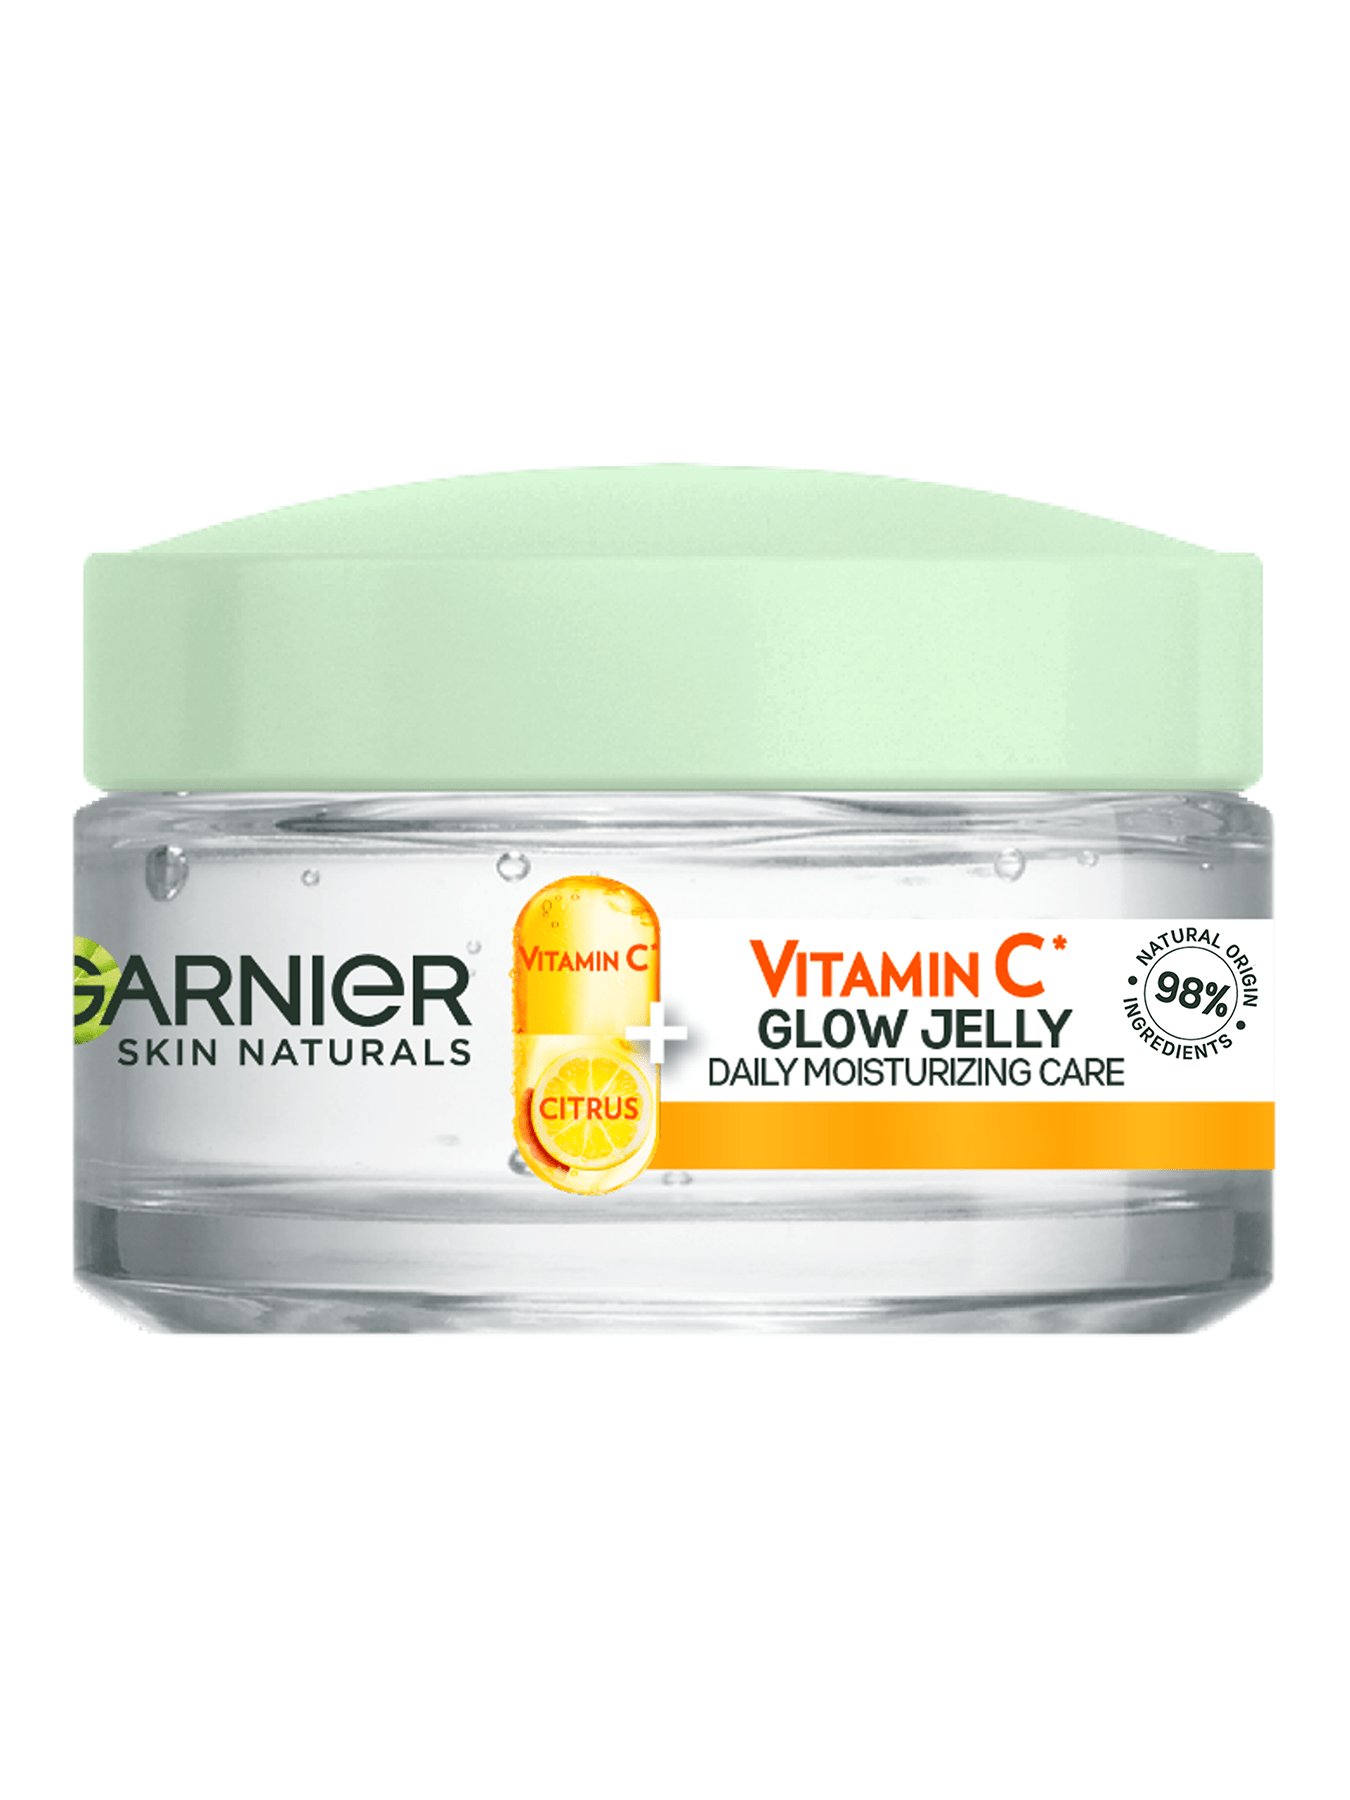 Garnier_VitaminC_Jelly_JAR 1350x